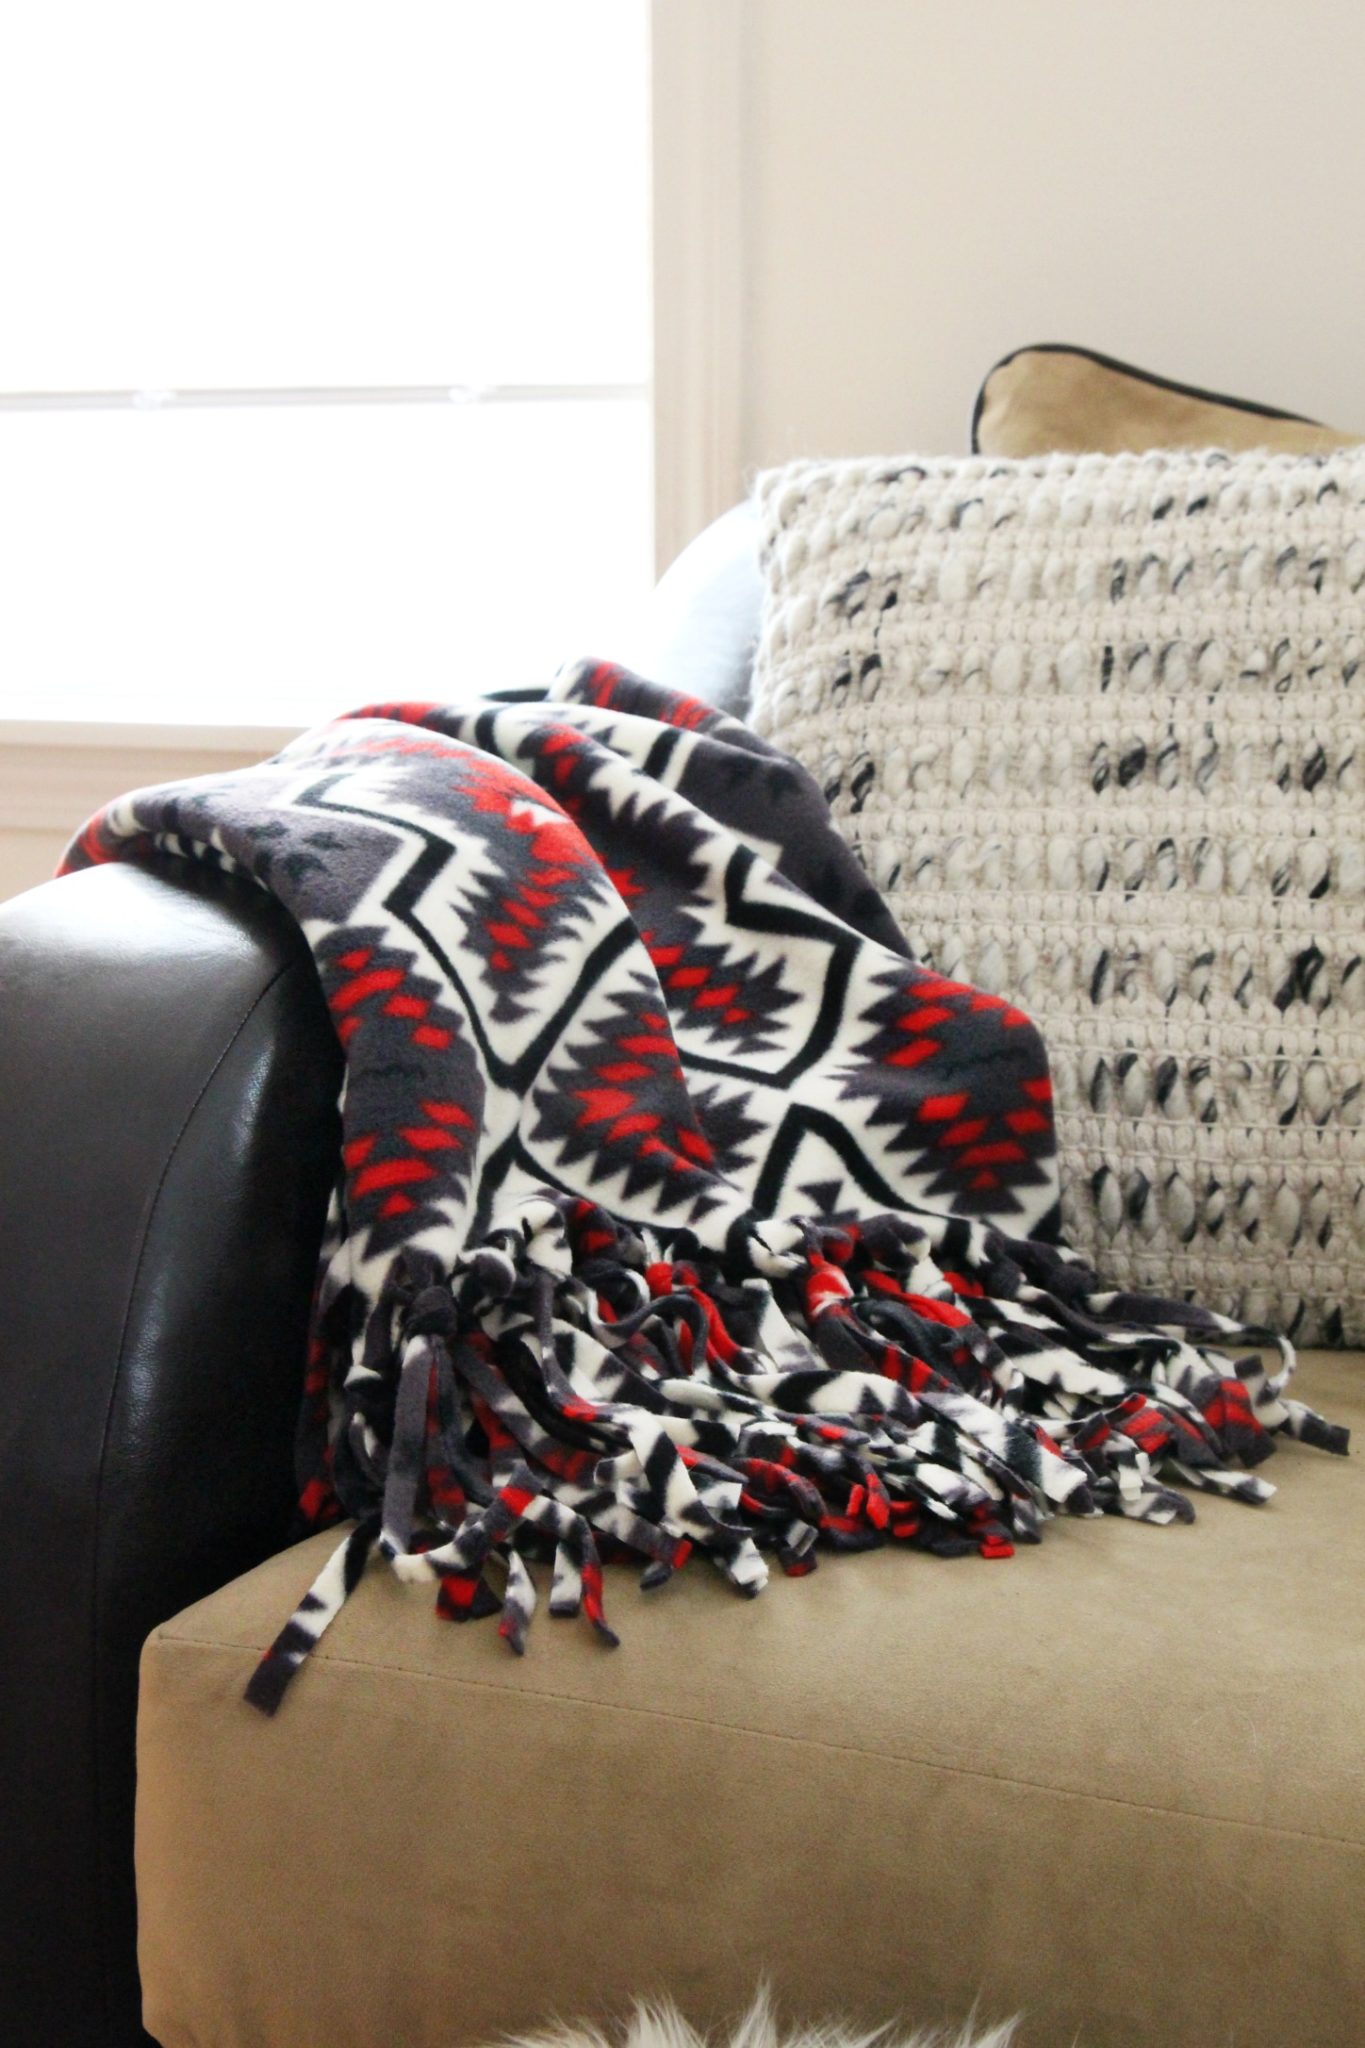 How to Make a Cozy, No Sew Throw Blanket Tutorial | DIY Fleece Blanket